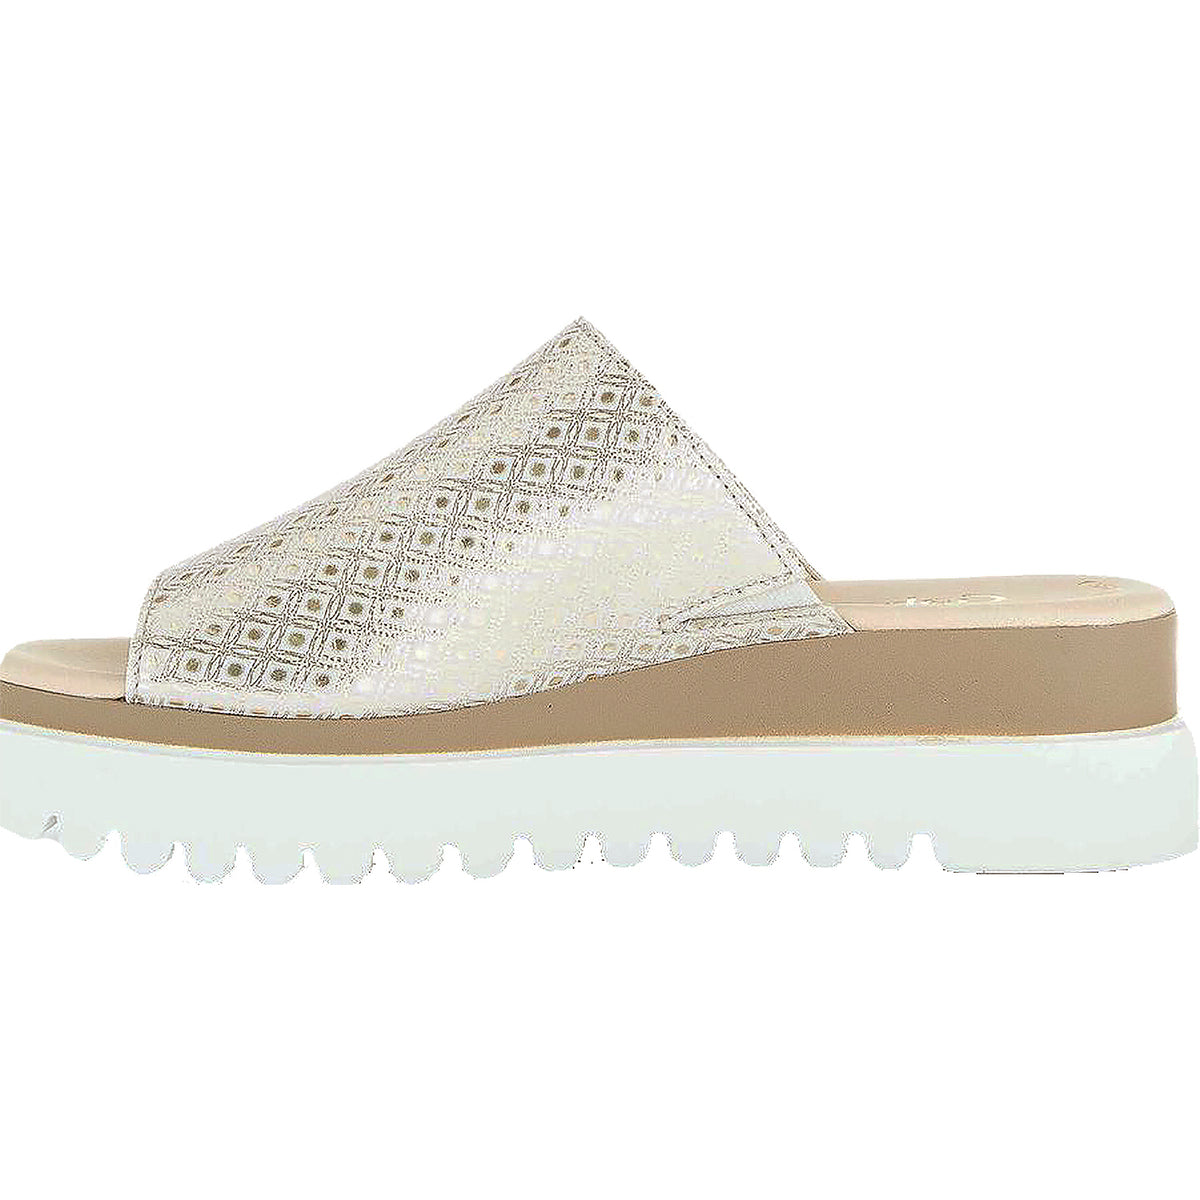 Gabor 84.613.62 | Women's Platform Slide Sandals | Footwear etc.